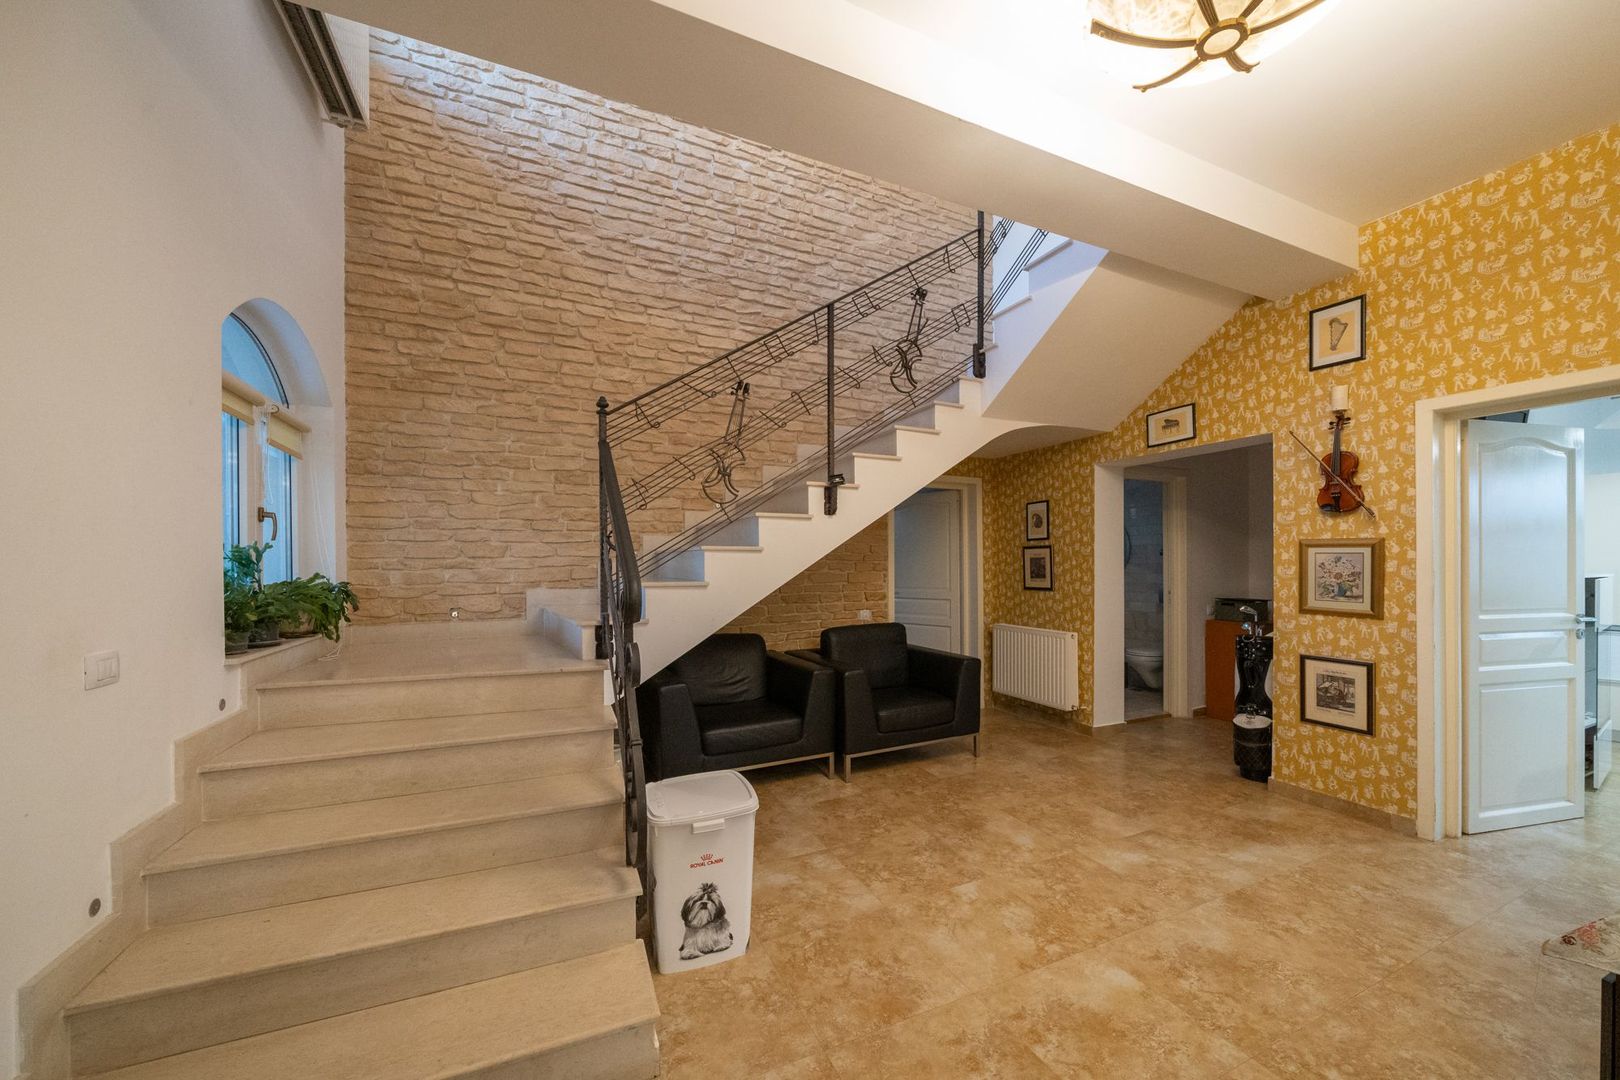 Saftica | Casa superba in stil mediteranean pe un teren de 700 mp